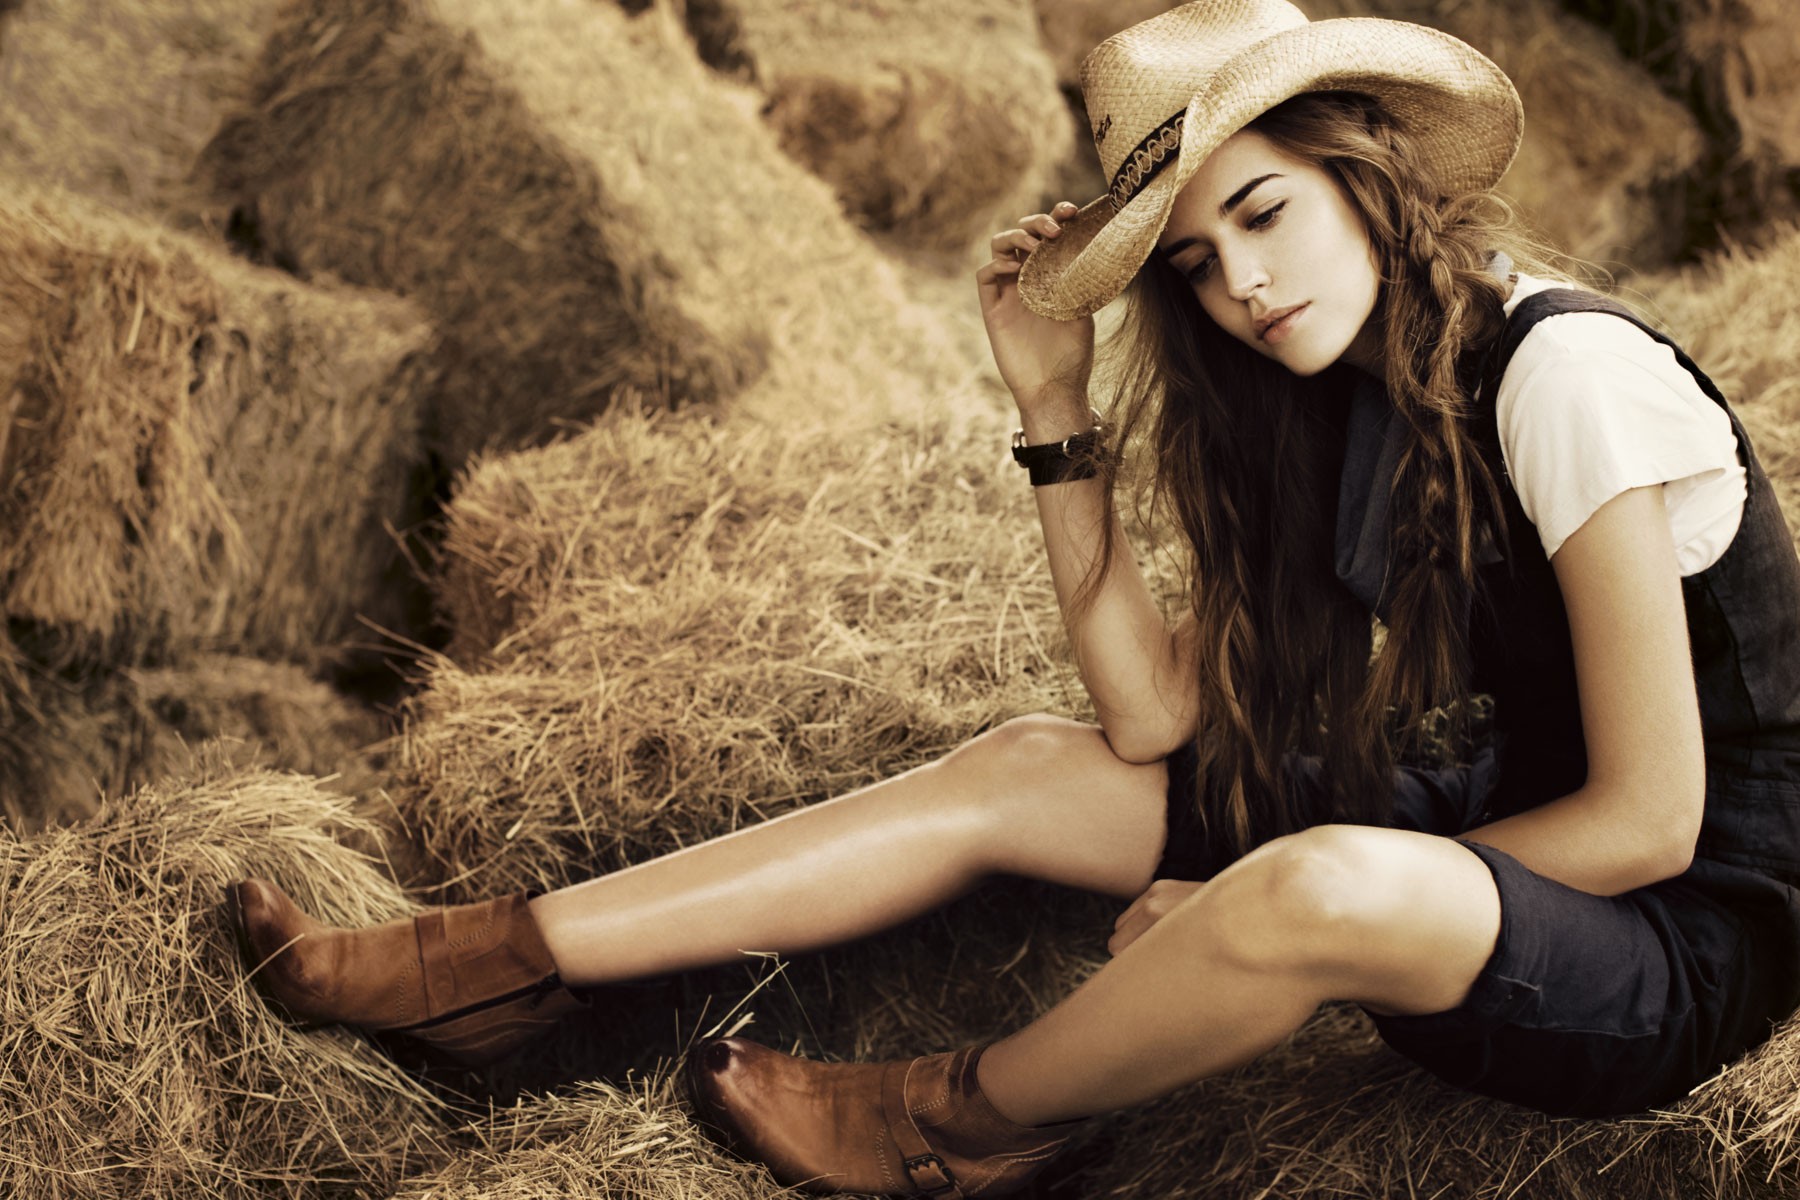 women model brunette long hair women outdoors straw cowboy hats boots black outfits sitting clara alonso Wallpaper